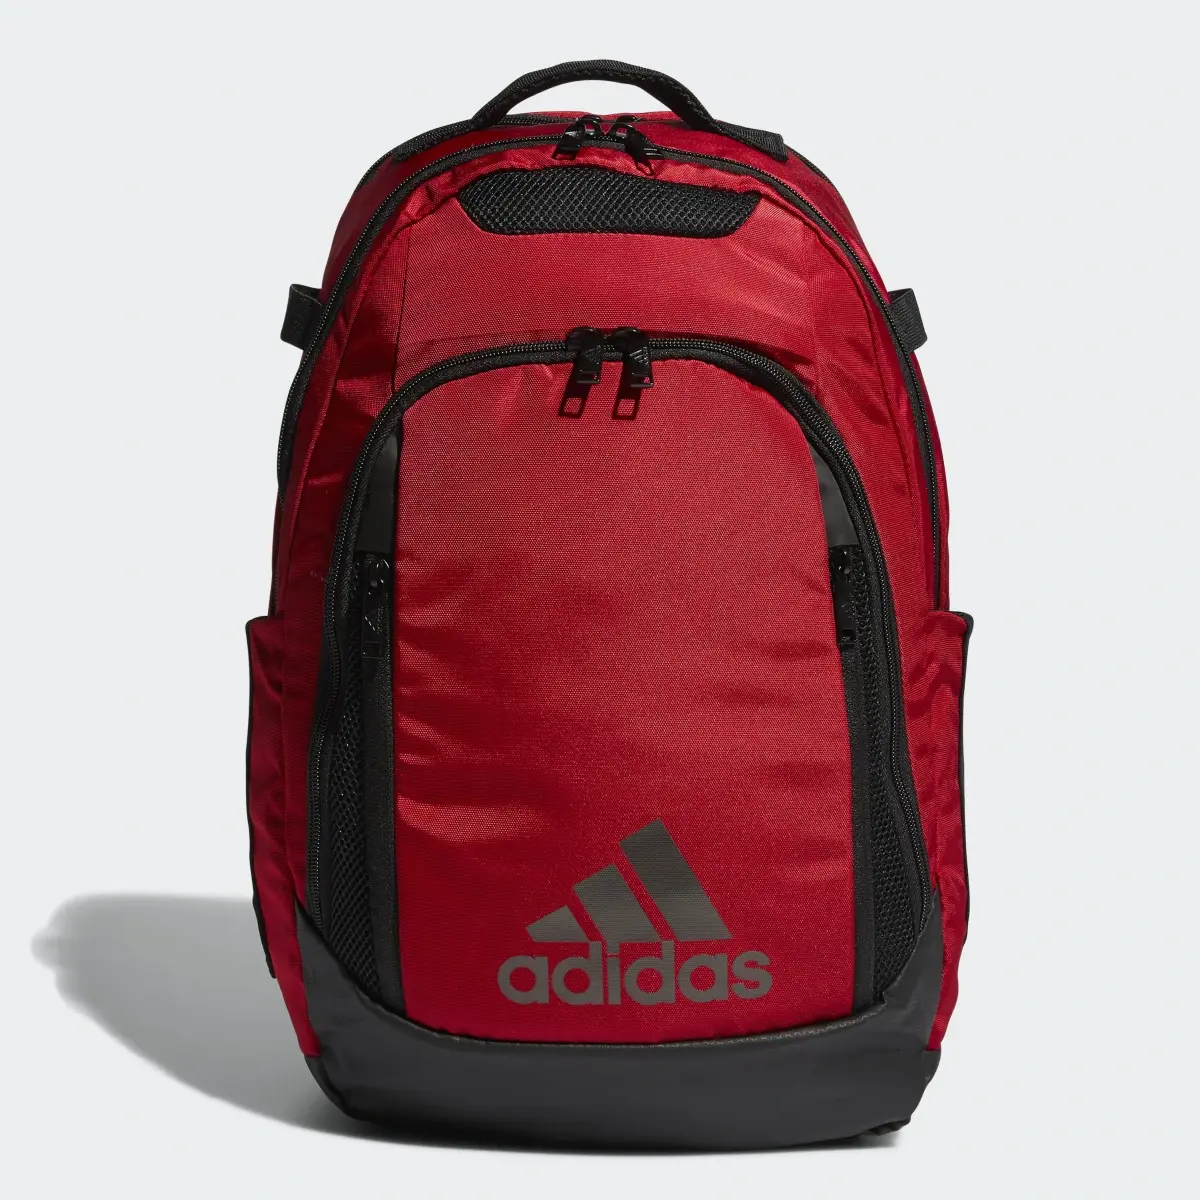 Adidas 5-Star Team Backpack. 1